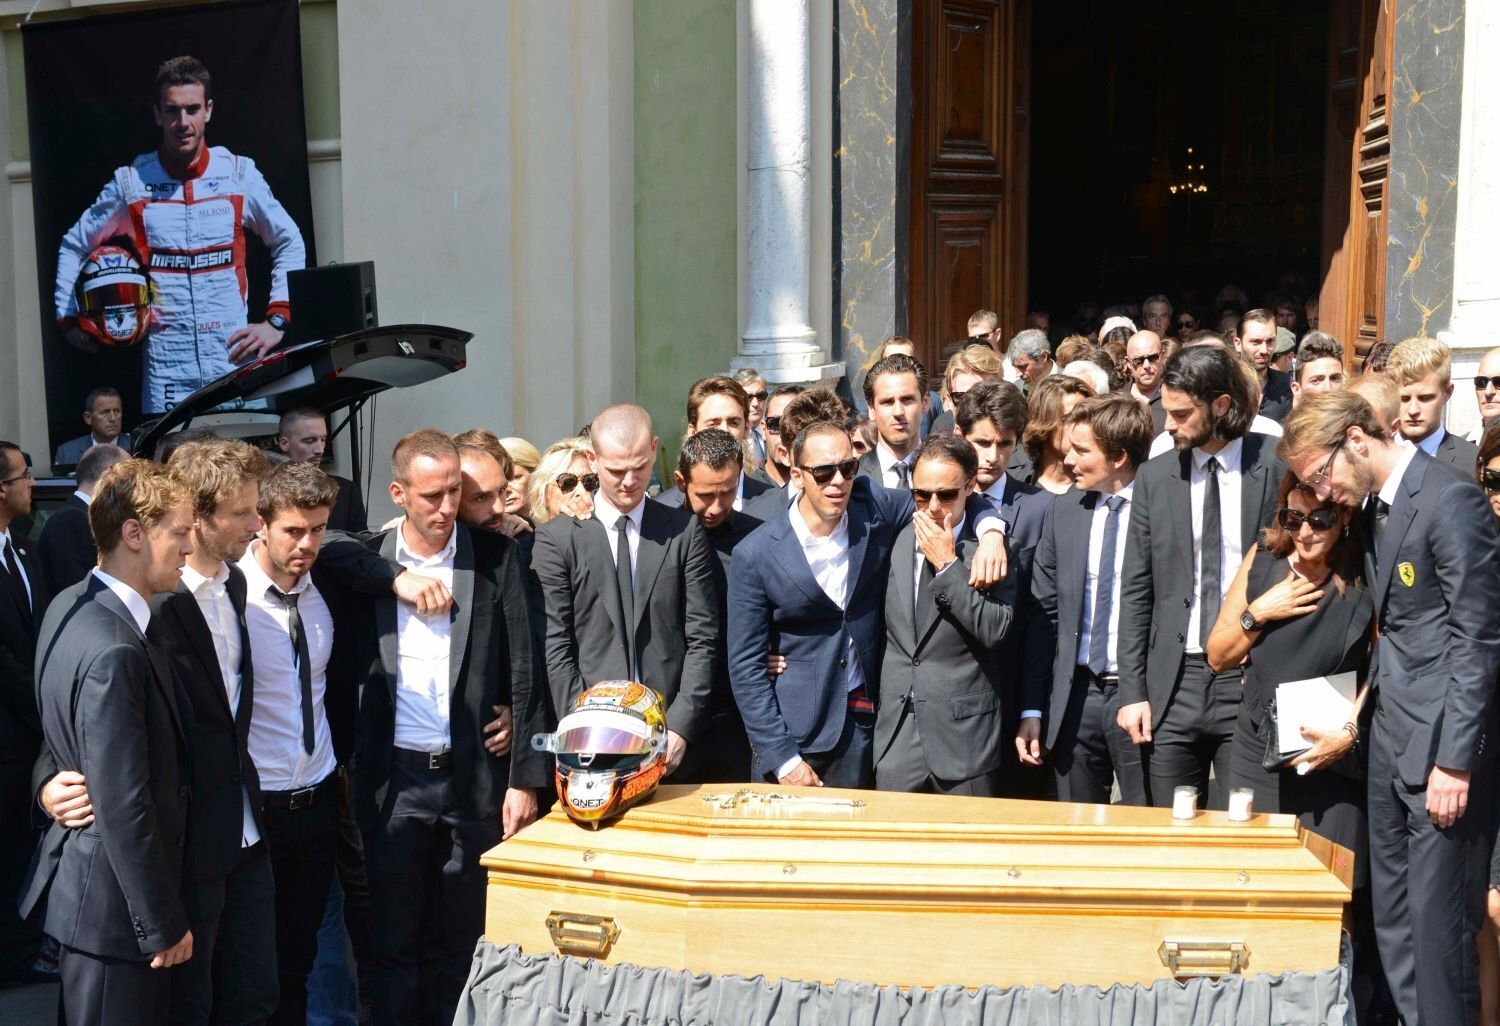 Pohřeb Julese Bianchiho